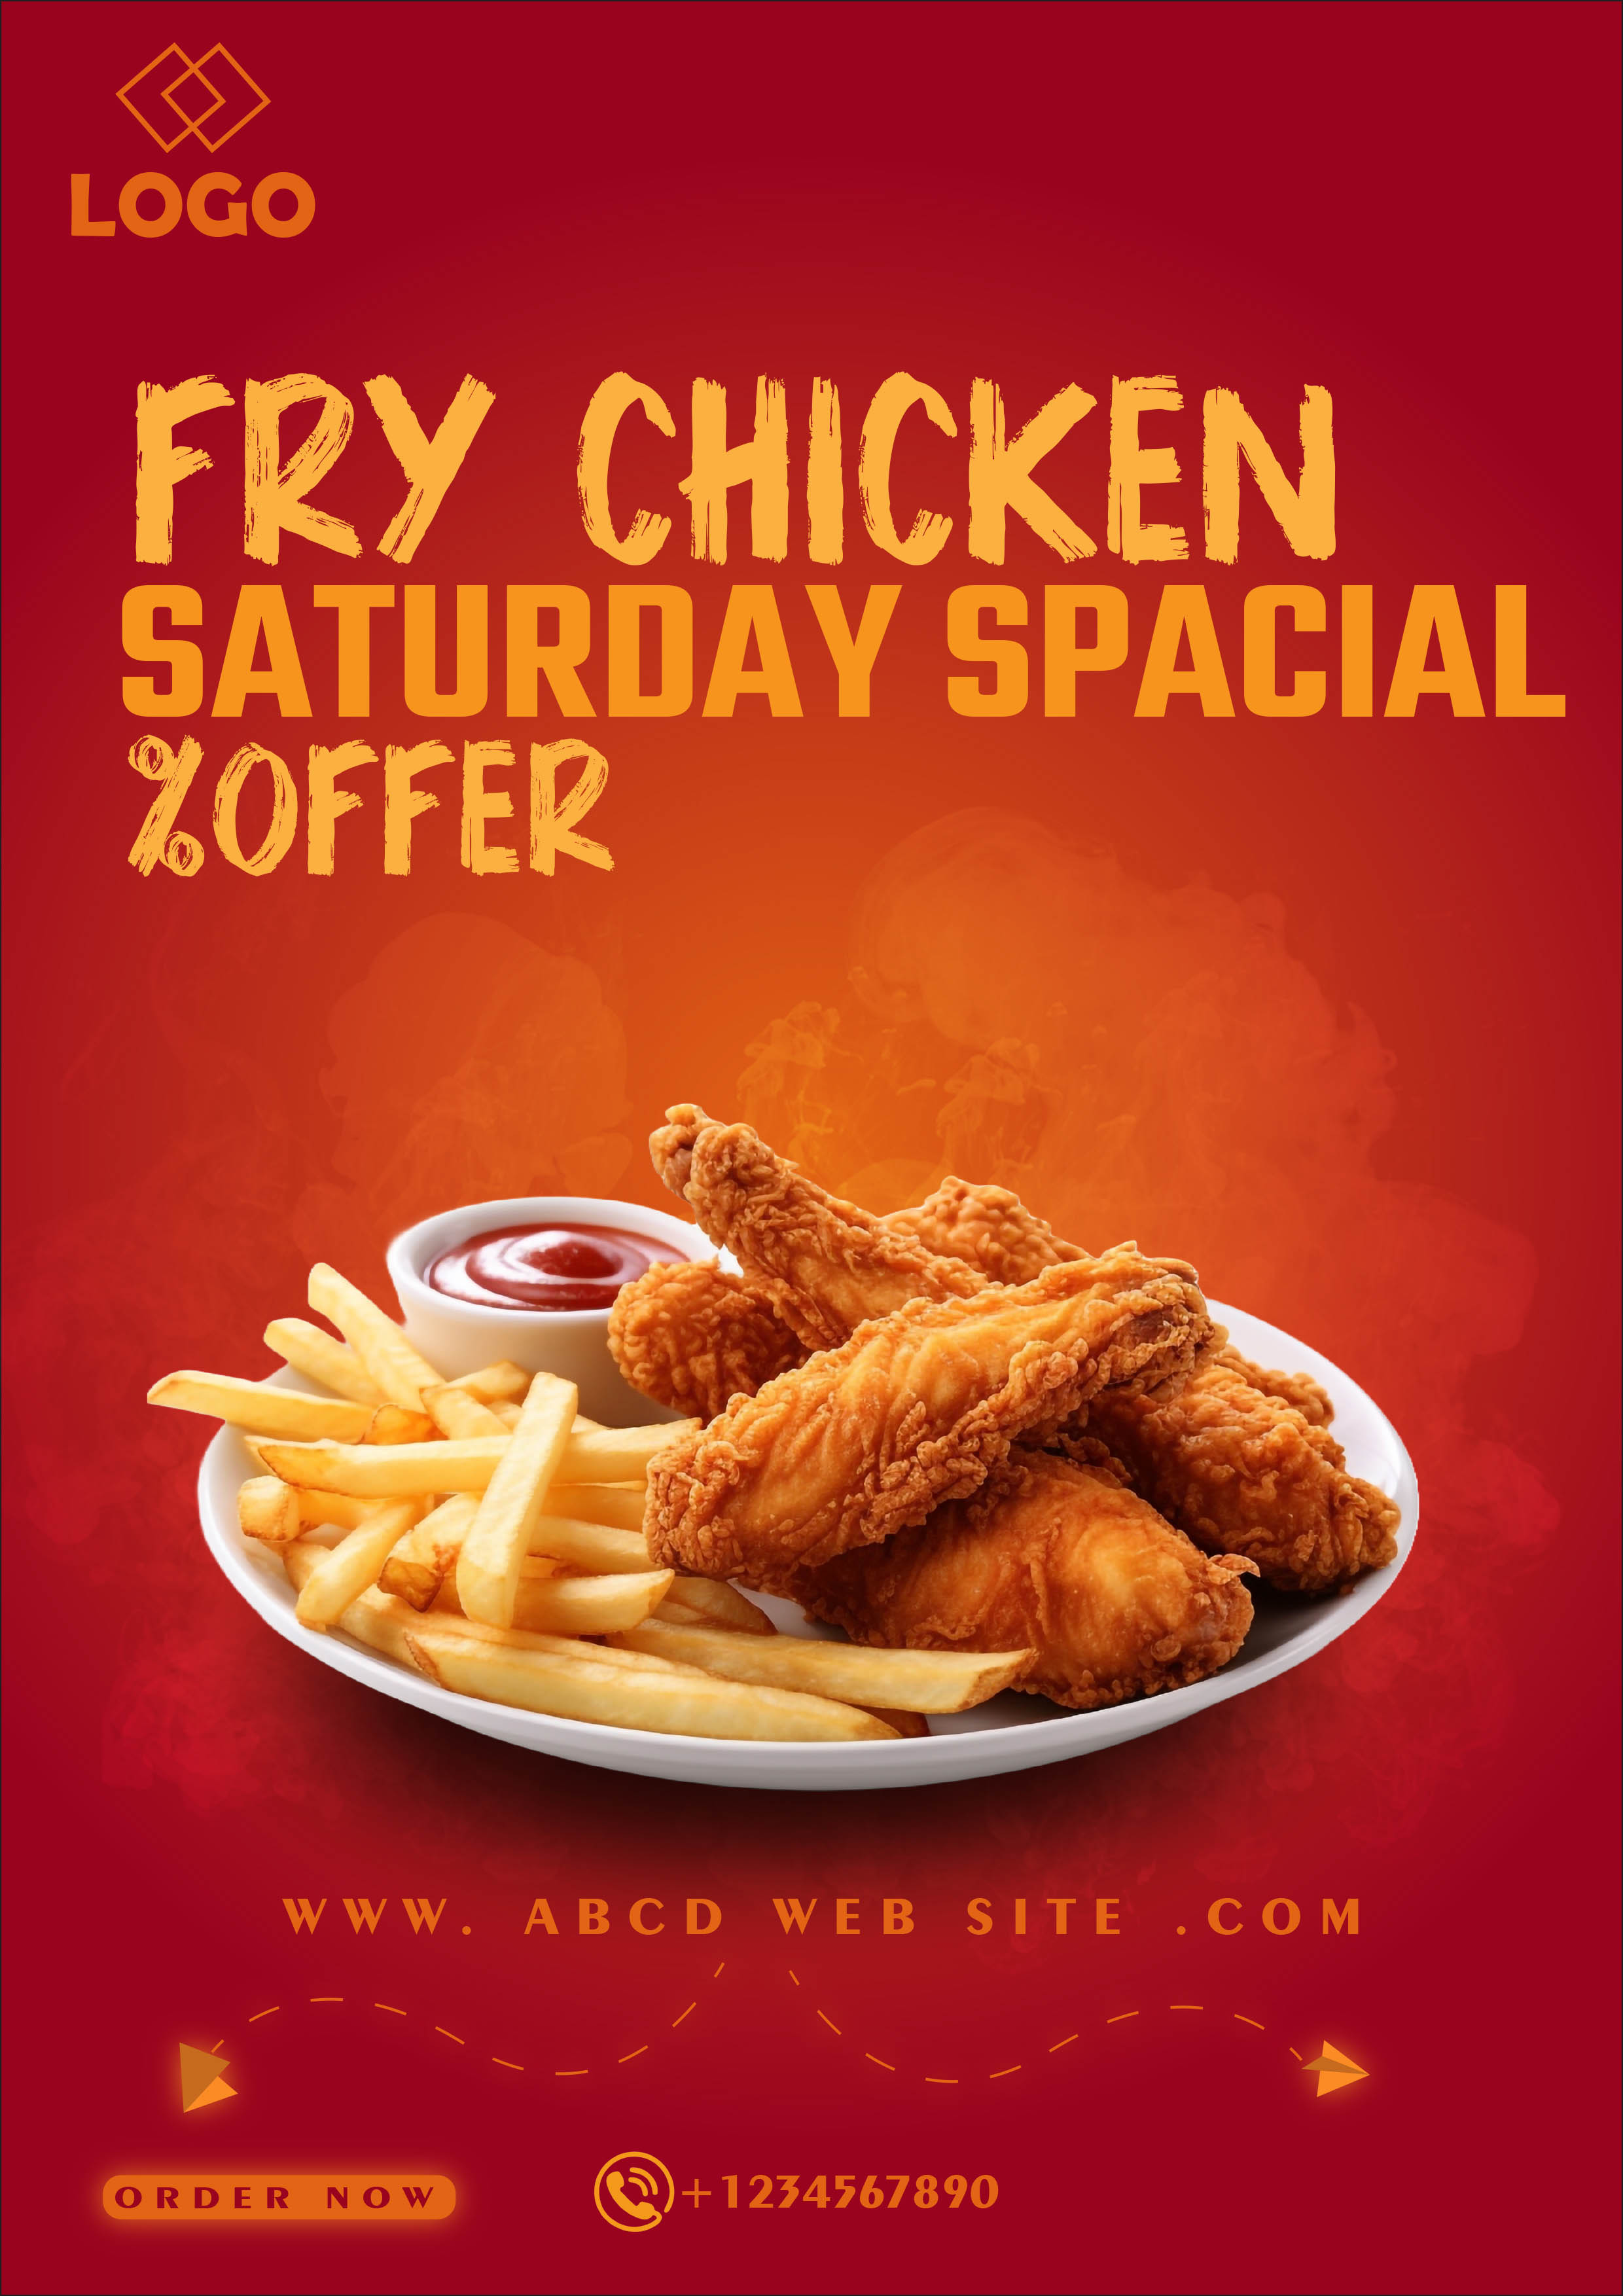 chicken fry advertisment copy 425